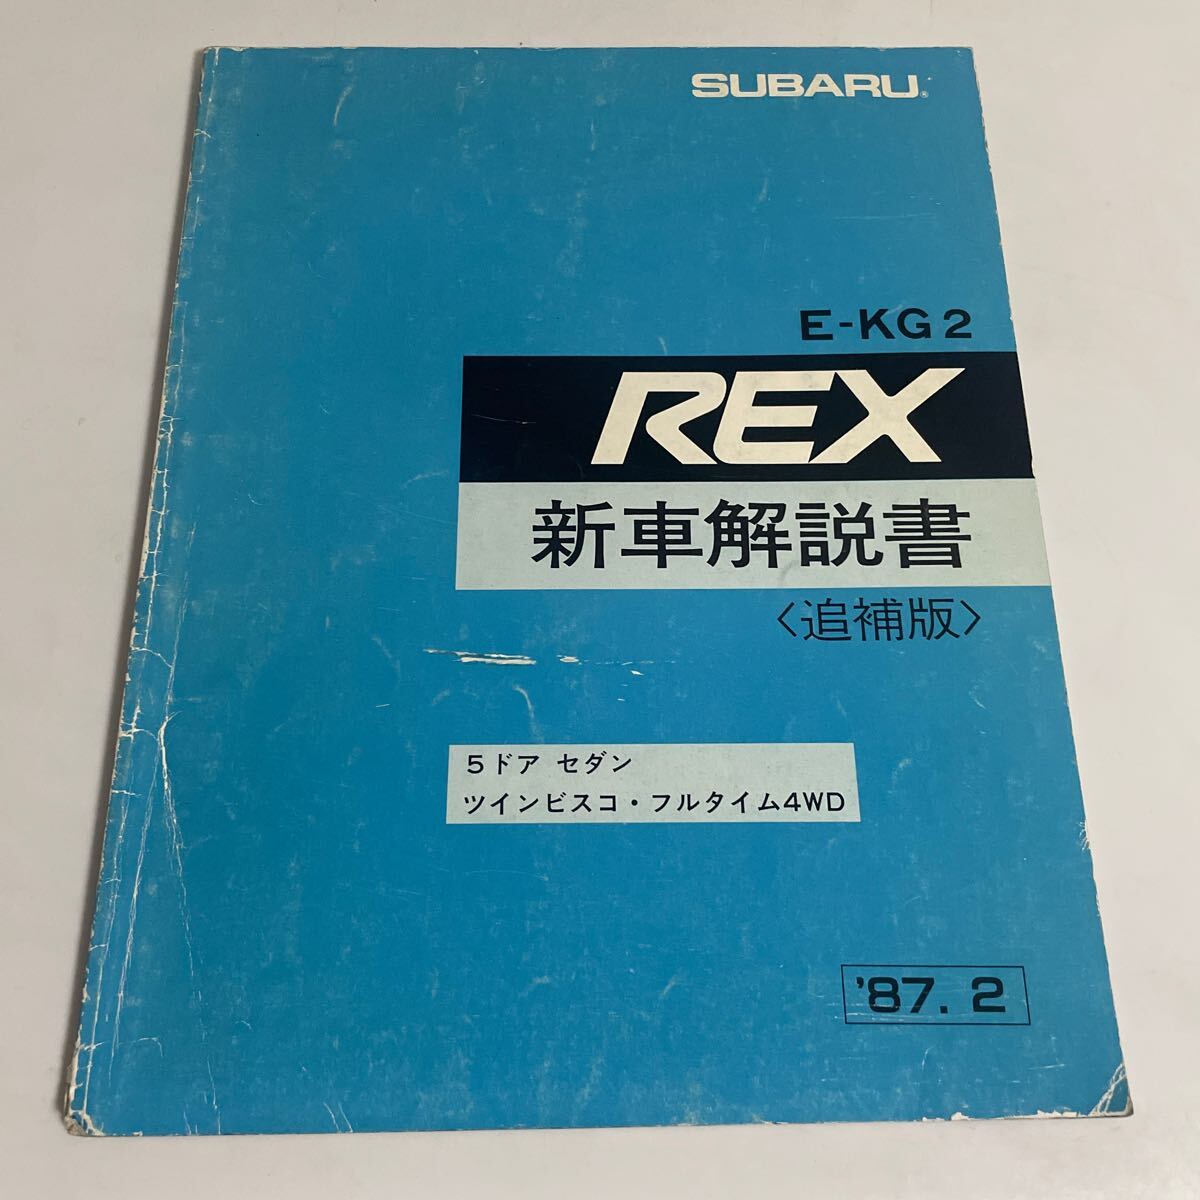 SUBARU スバル REX レックス E-KG2 新車解説書 追補版 5ドア セダン ツインビスコ フルタイム4WD 1987年2月 /サービスマニュアル/整備書_画像1